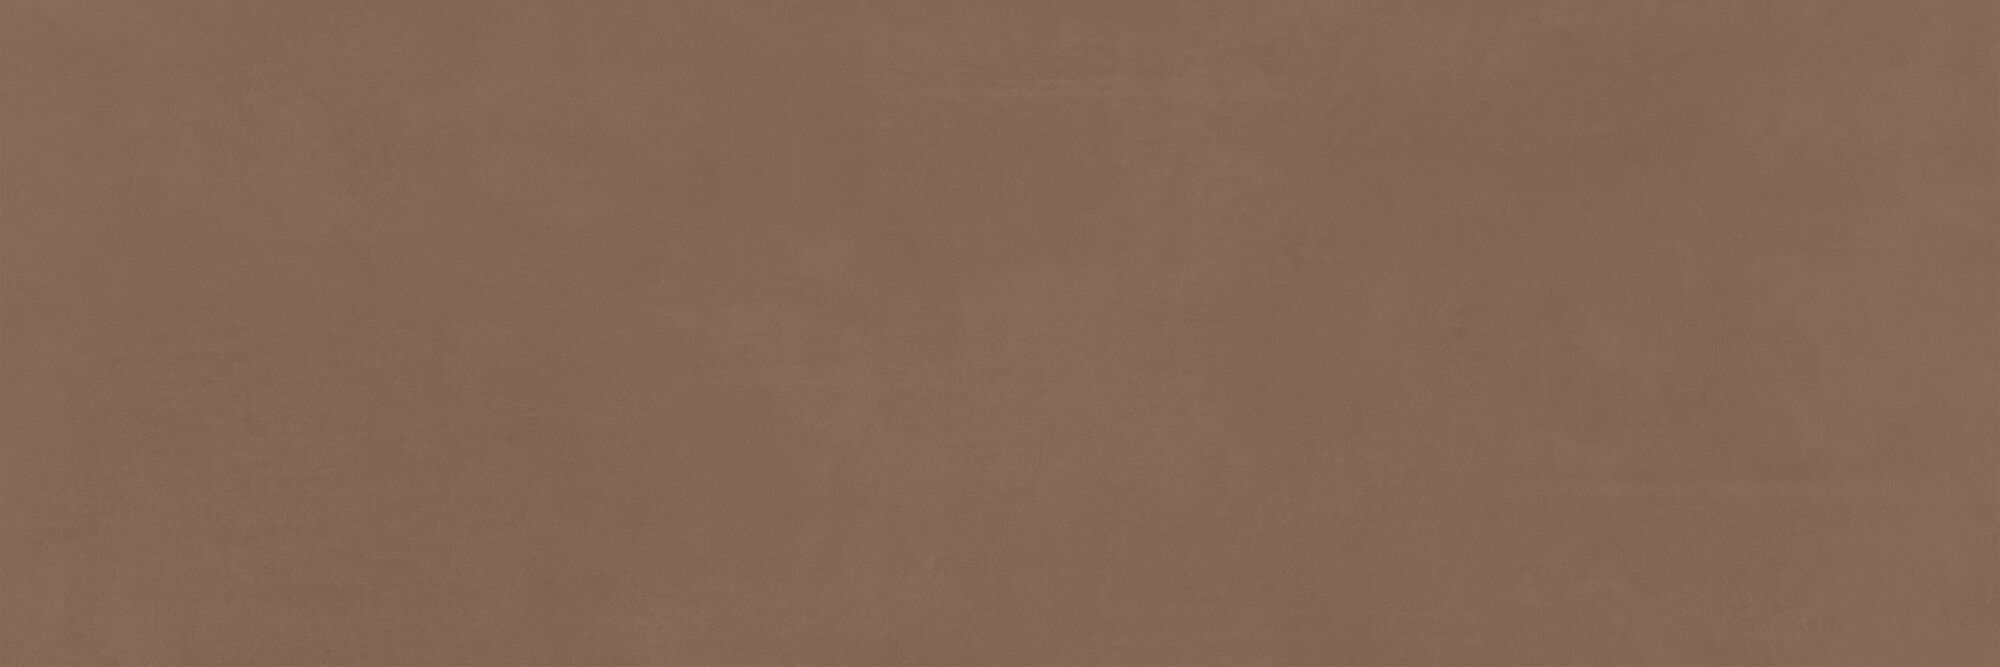 Плитка Meissen Keramik Fragmenti коричневый 25x75 A16500 4